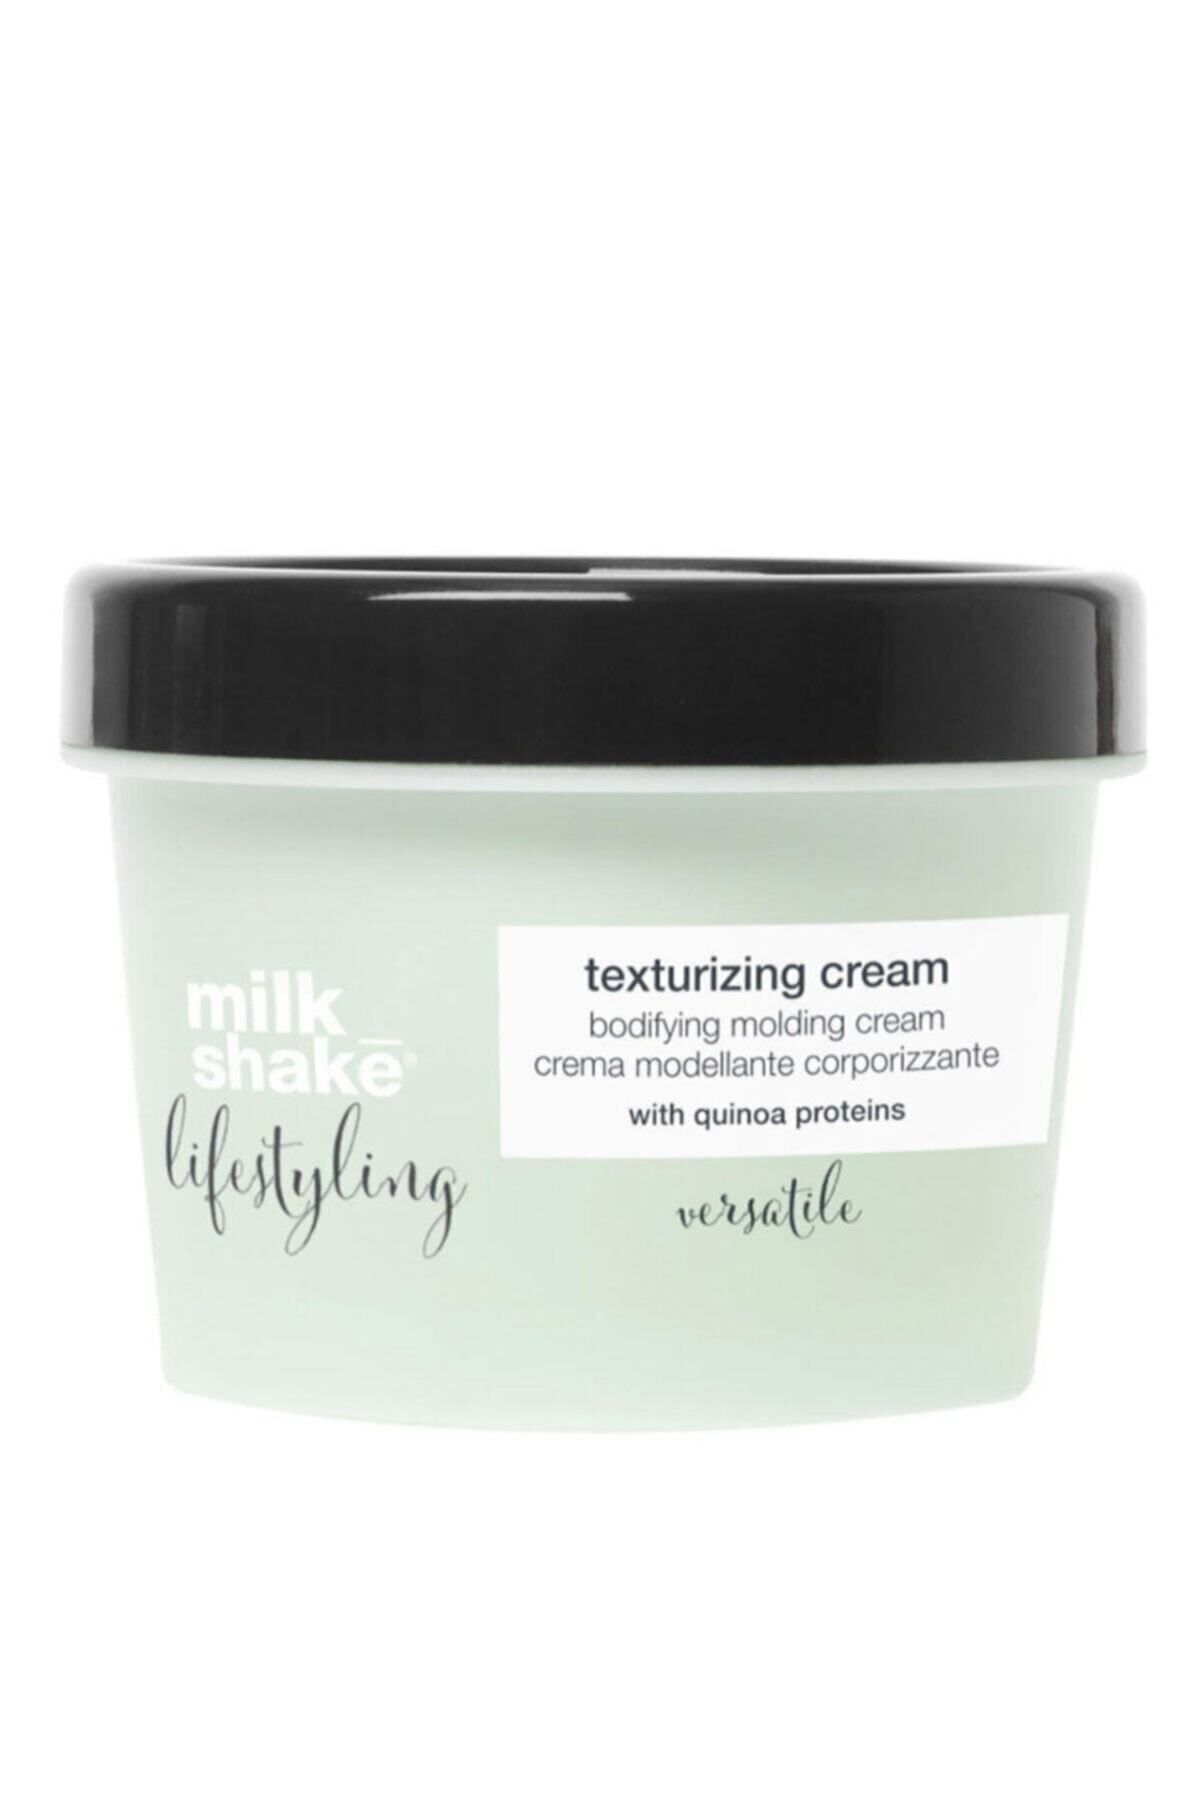 Milkshake Milk Shake Life Styling Texturizing Cream 50 Ml